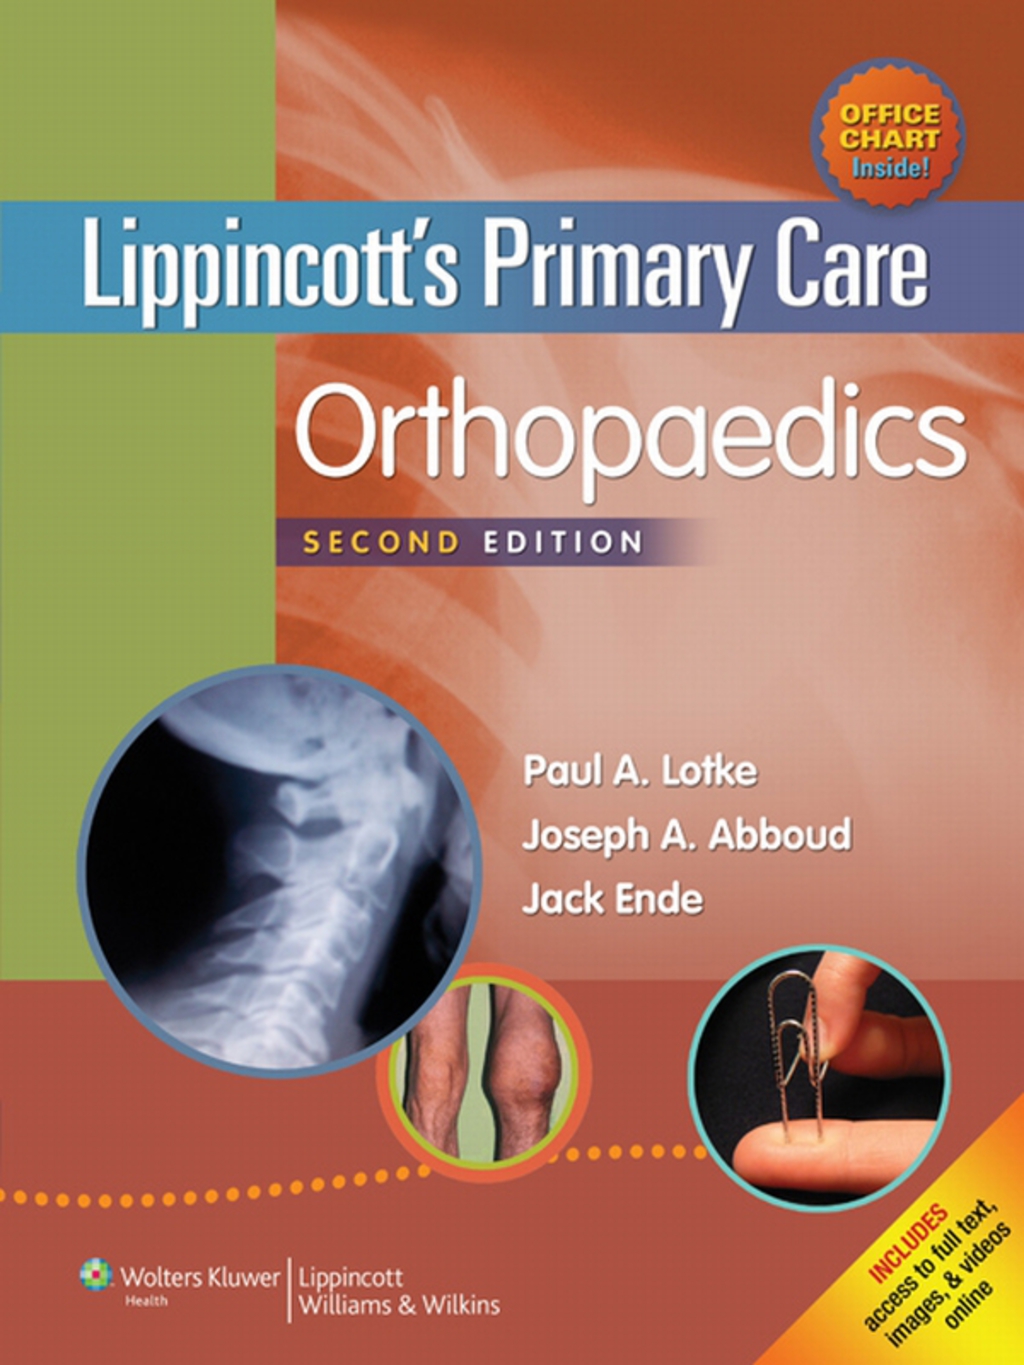 Lippincott's Primary Care Orthopaedics - 2nd Edition (eBook)